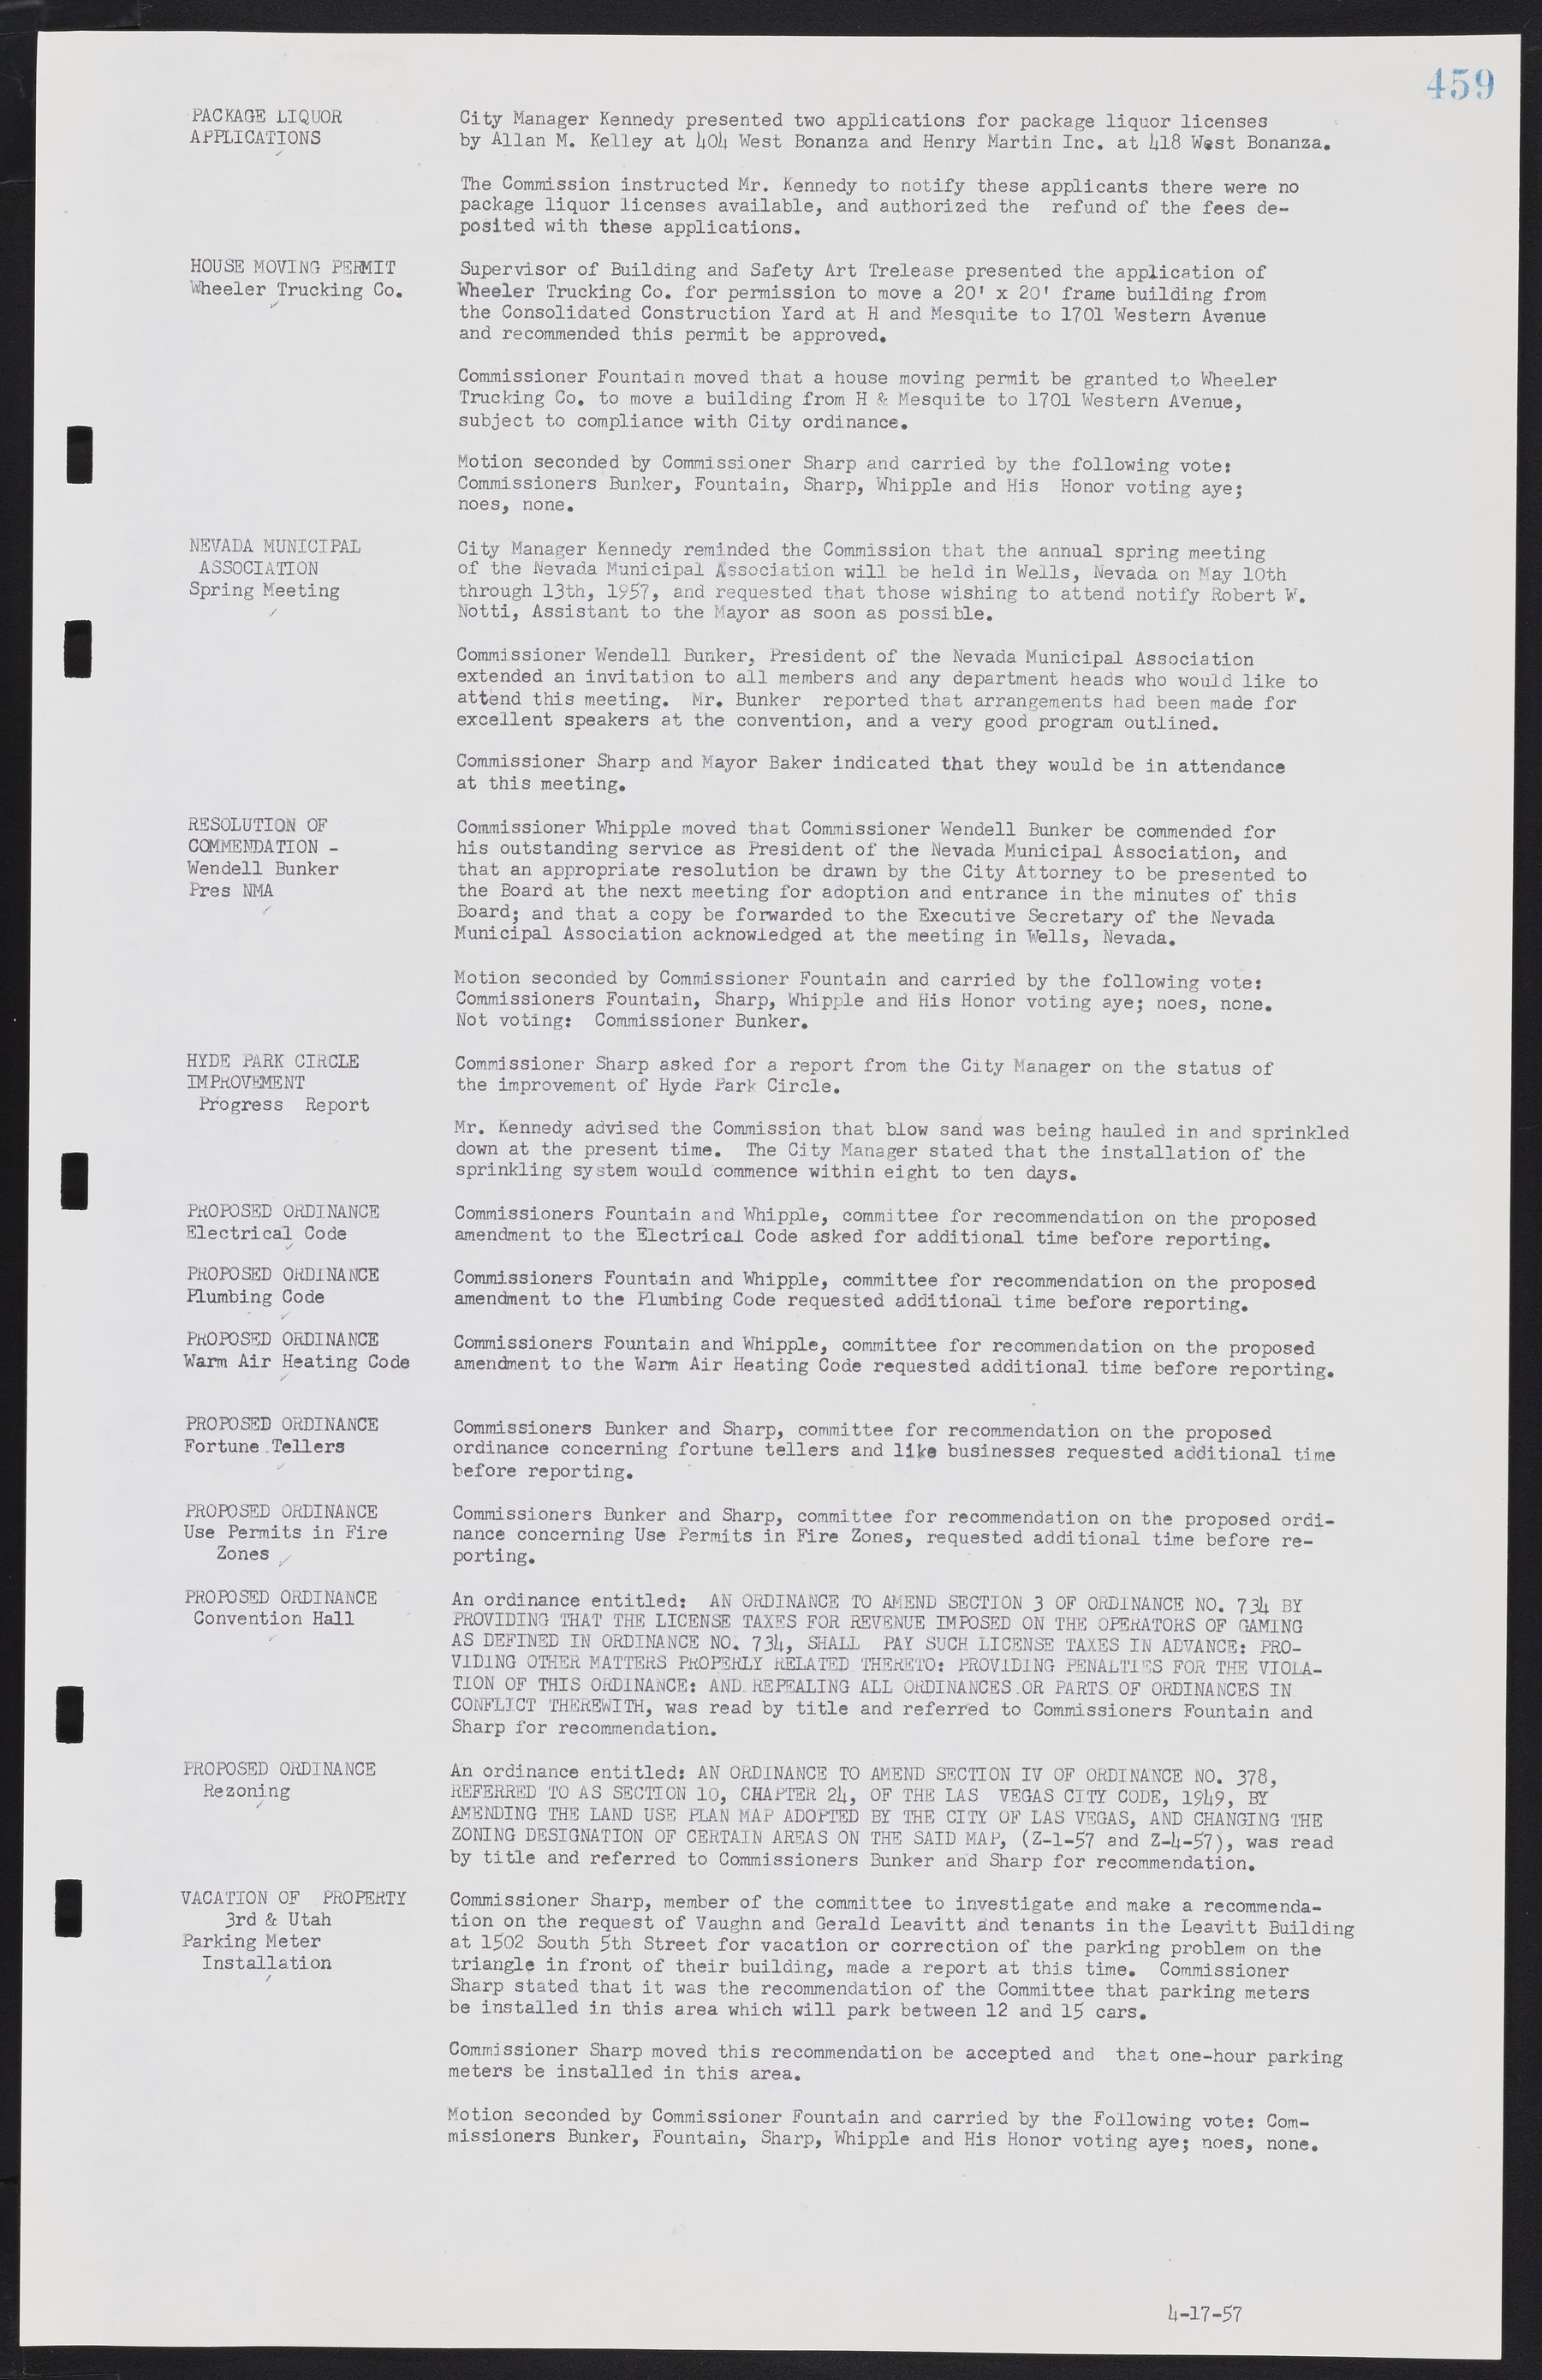 Las Vegas City Commission Minutes, September 21, 1955 to November 20, 1957, lvc000010-479